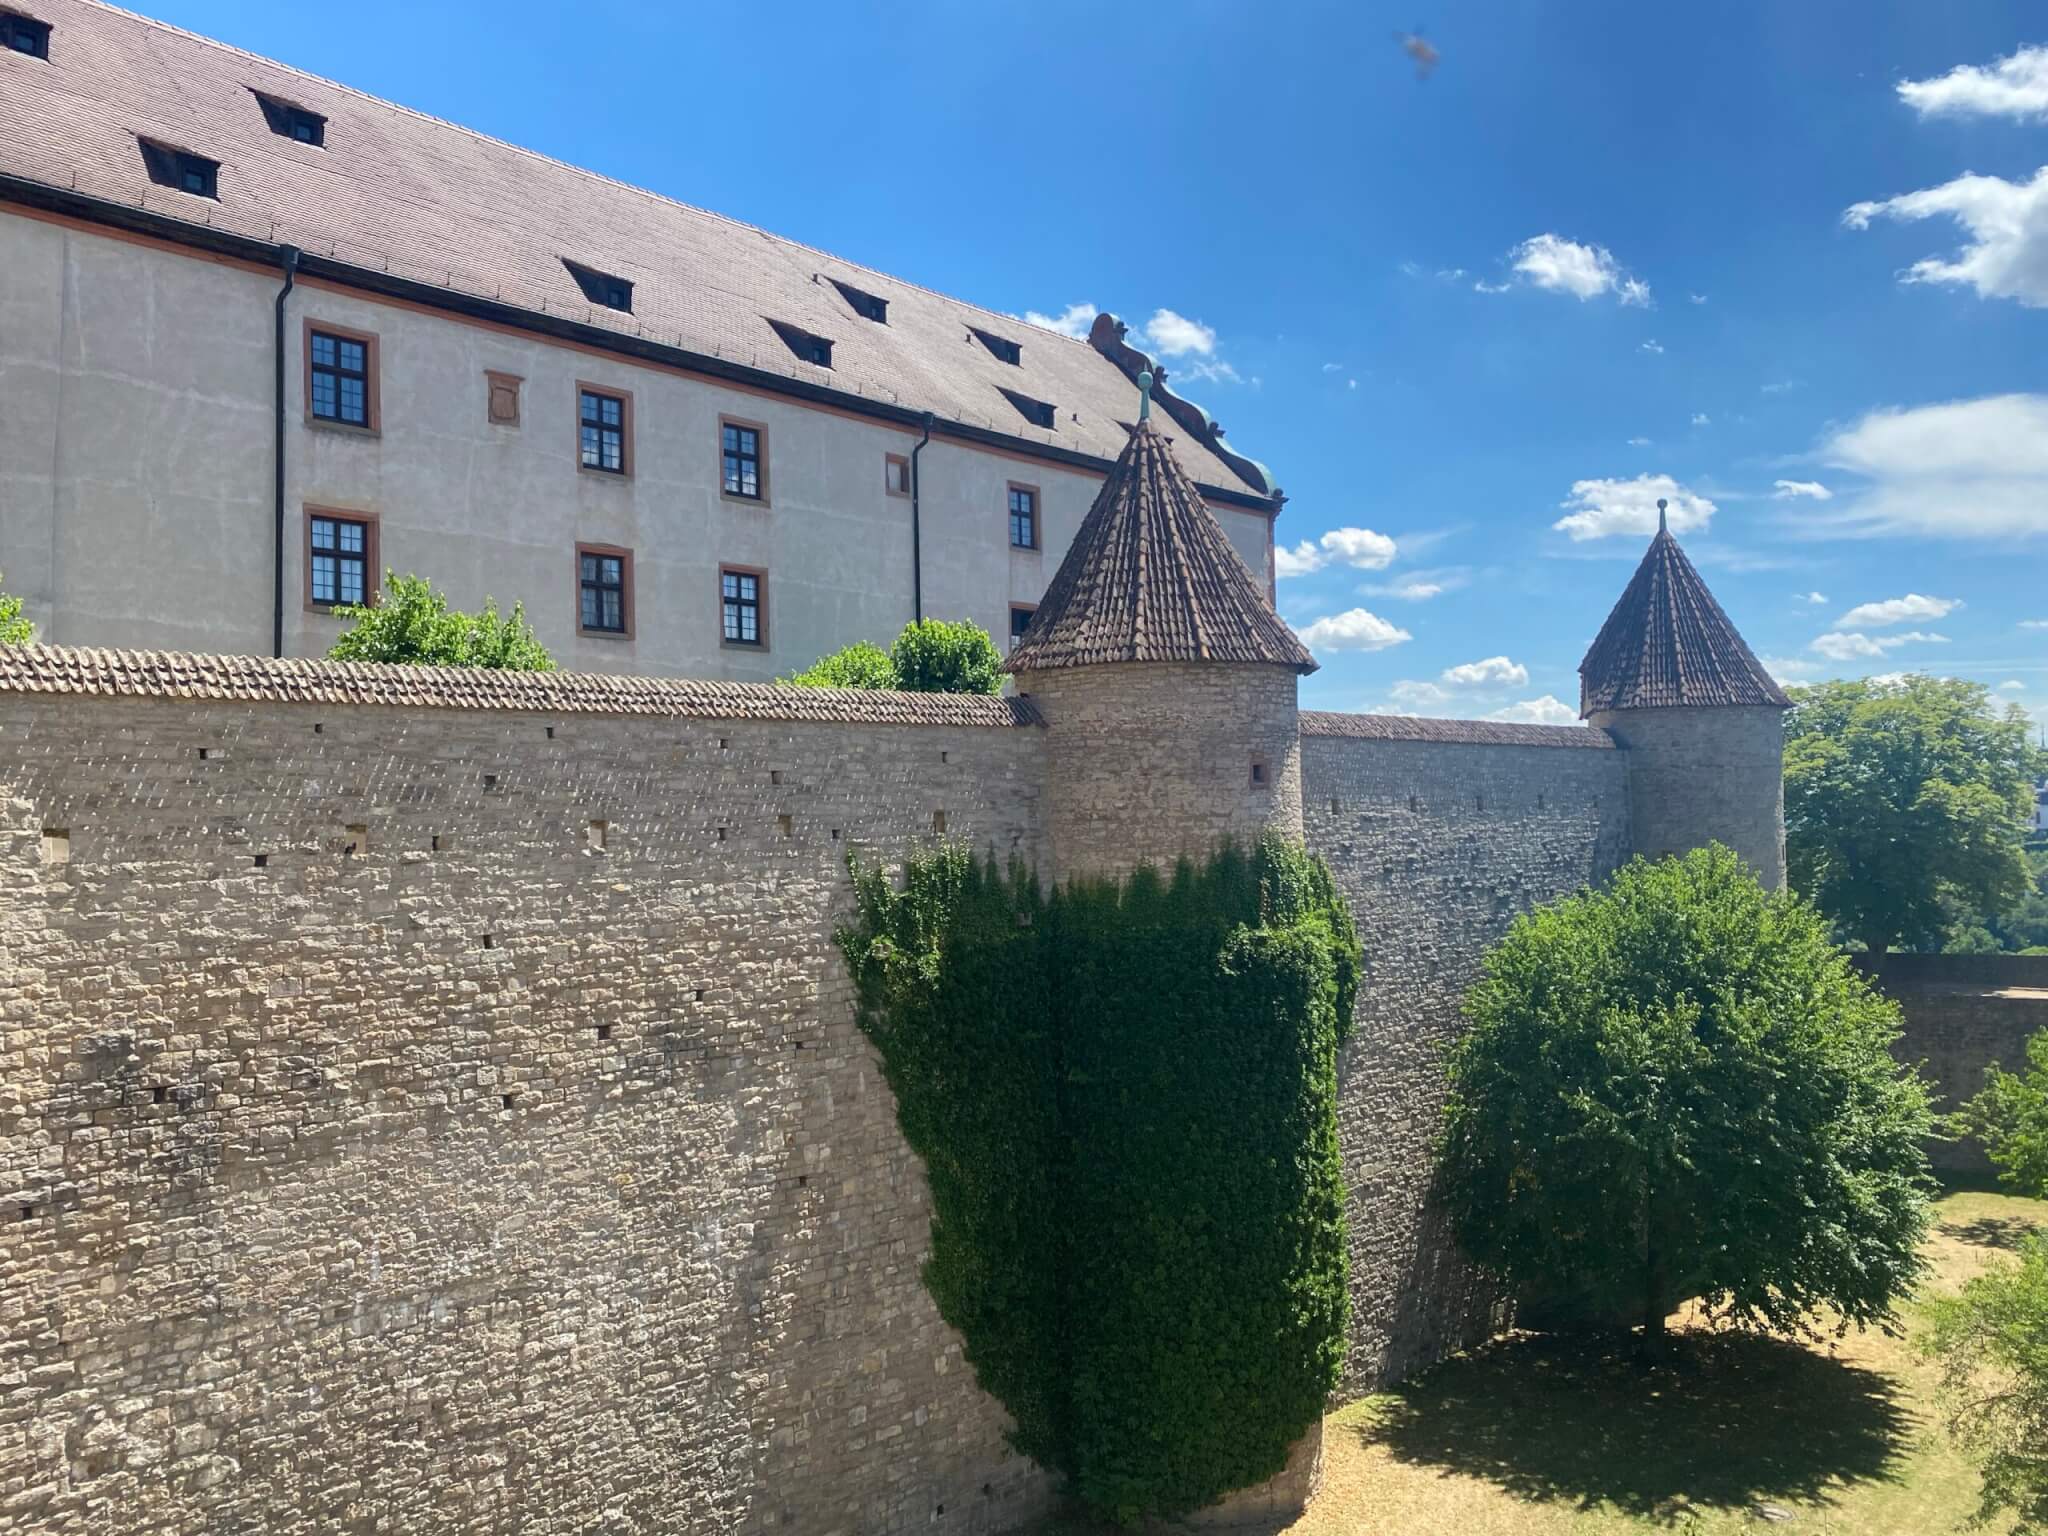 Festung Marienberg, Würzburg